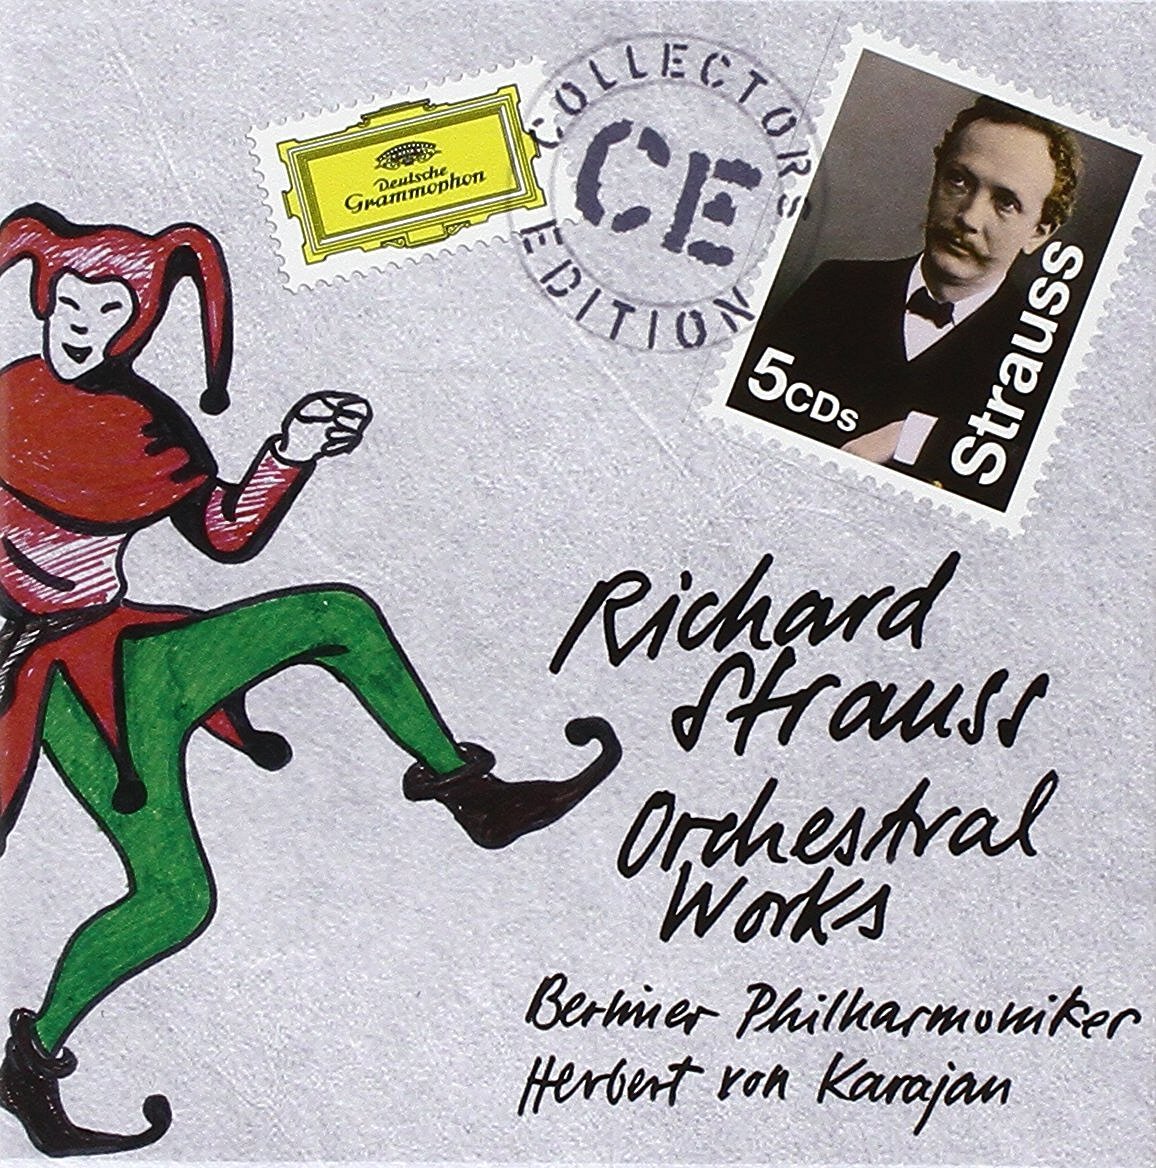 STRAUSS, R.: ORCHESTRAL WORKS - KARAJAN, BERLIN PHILHARMONIC (5 CDS)